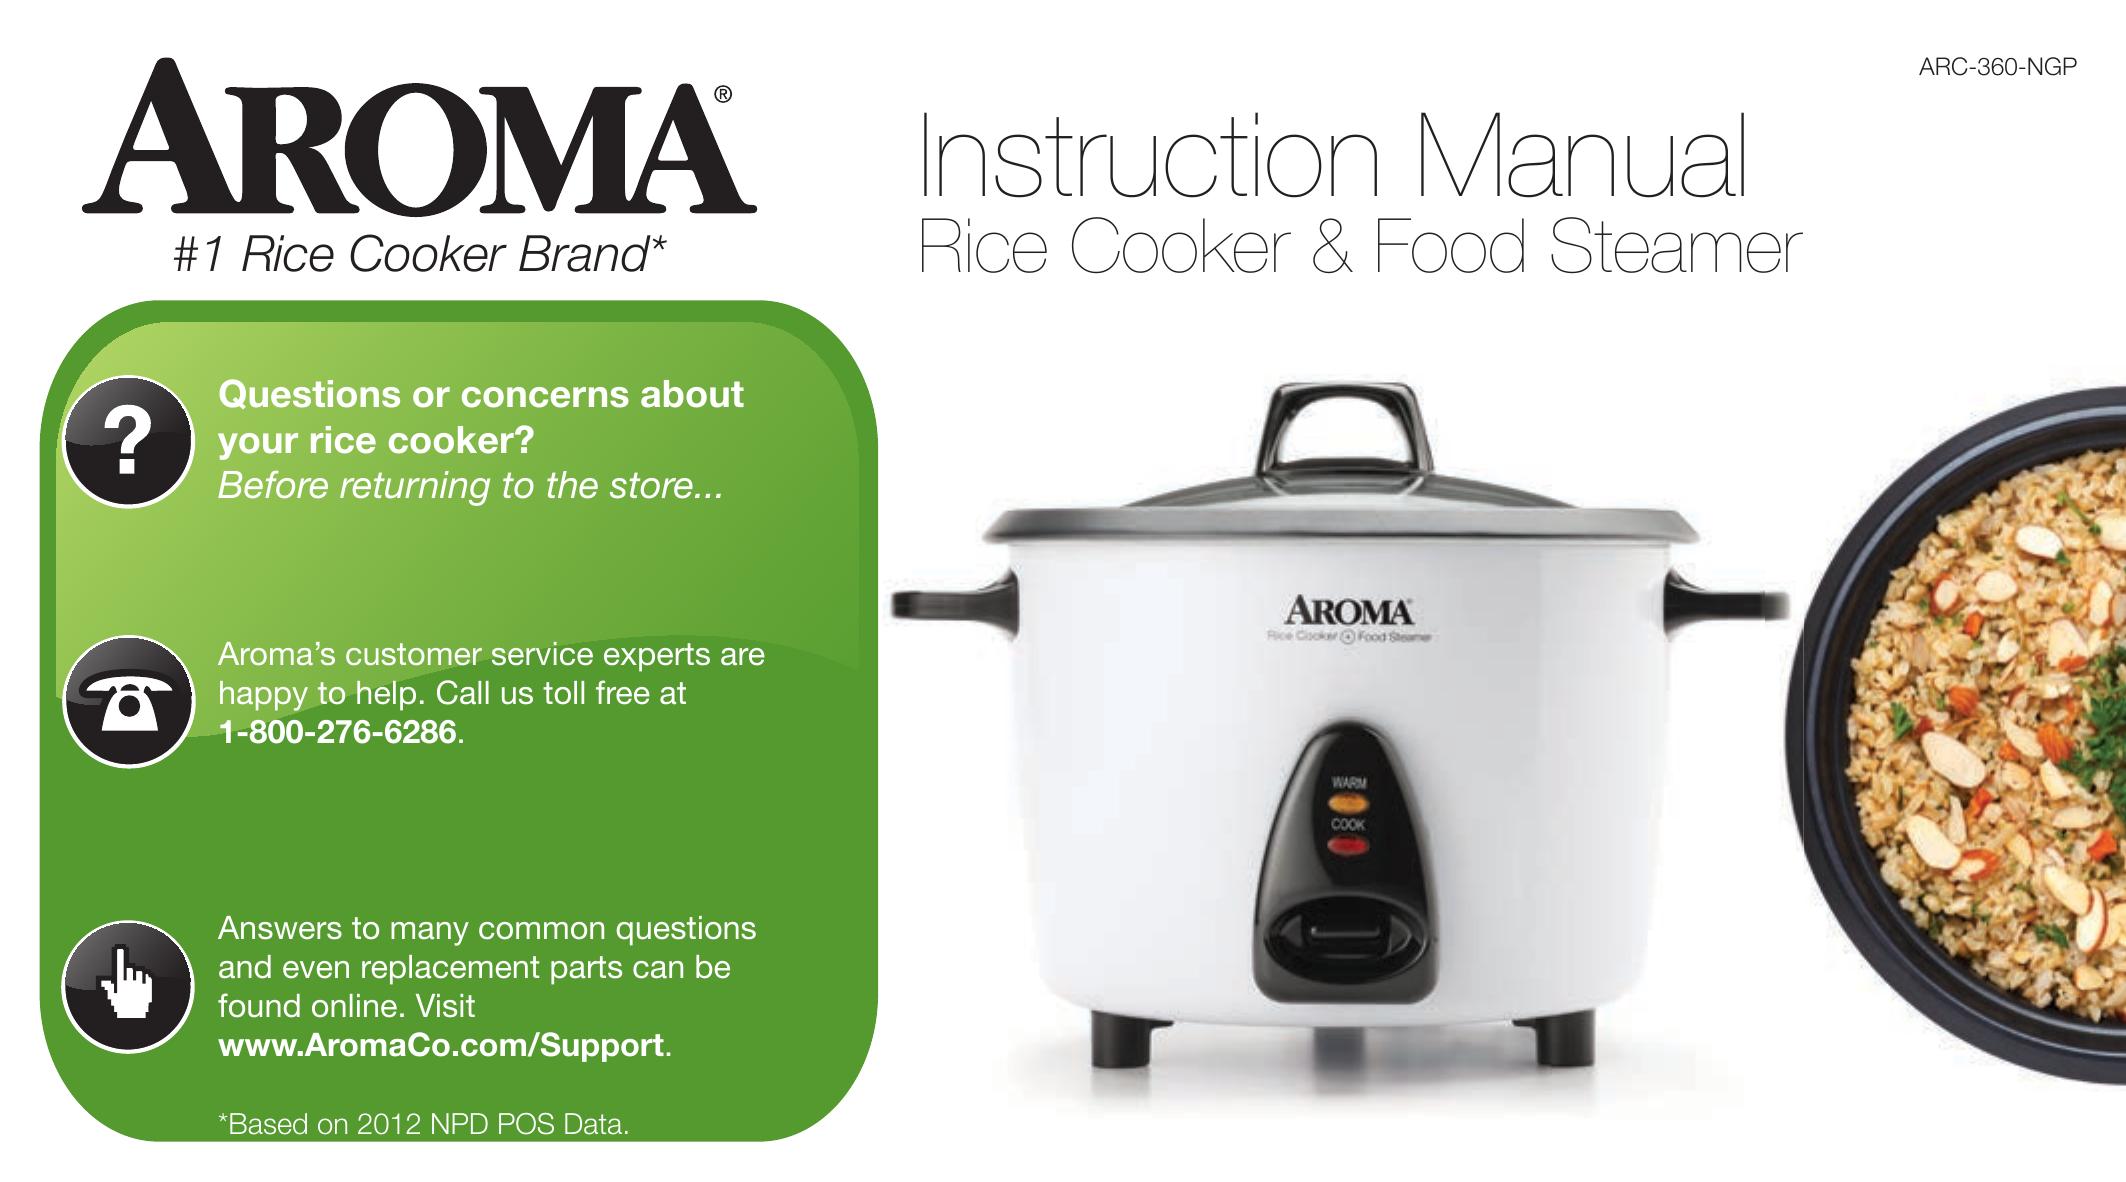 Aroma ARC-360-NGP Rice Cooker User Manual